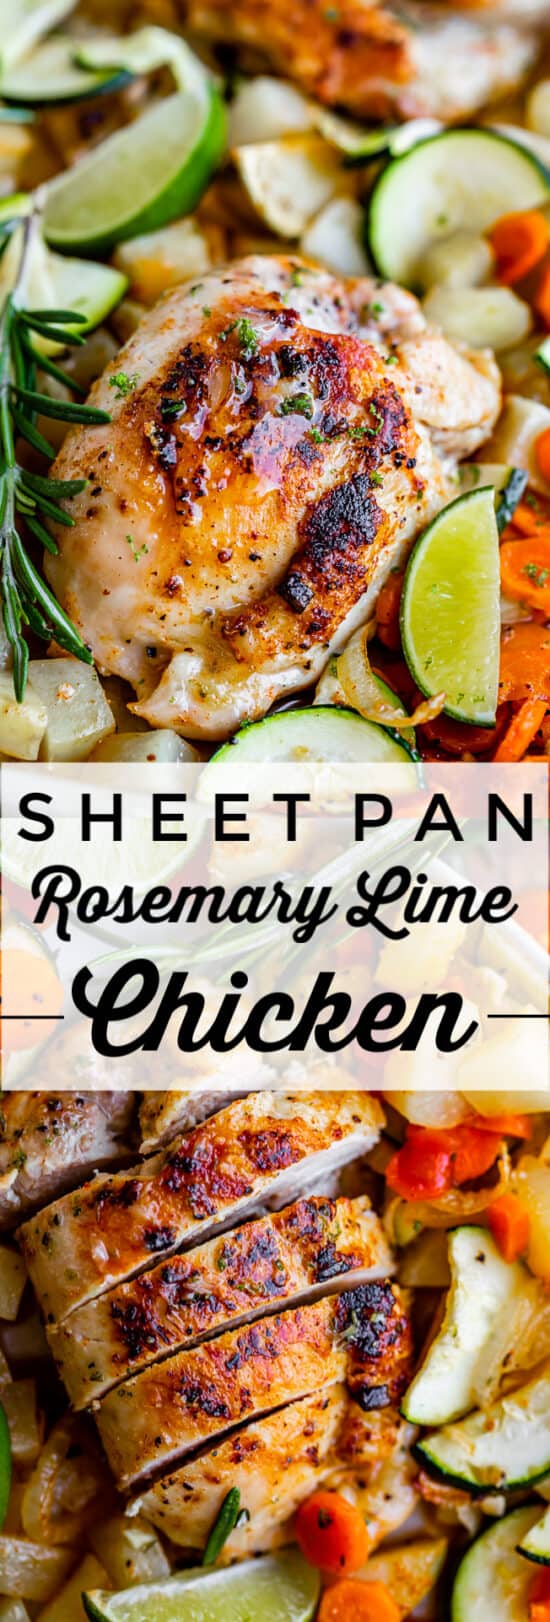 Sheet Pan Rosemary Lime Chicken and Veggies - The Food Charlatan